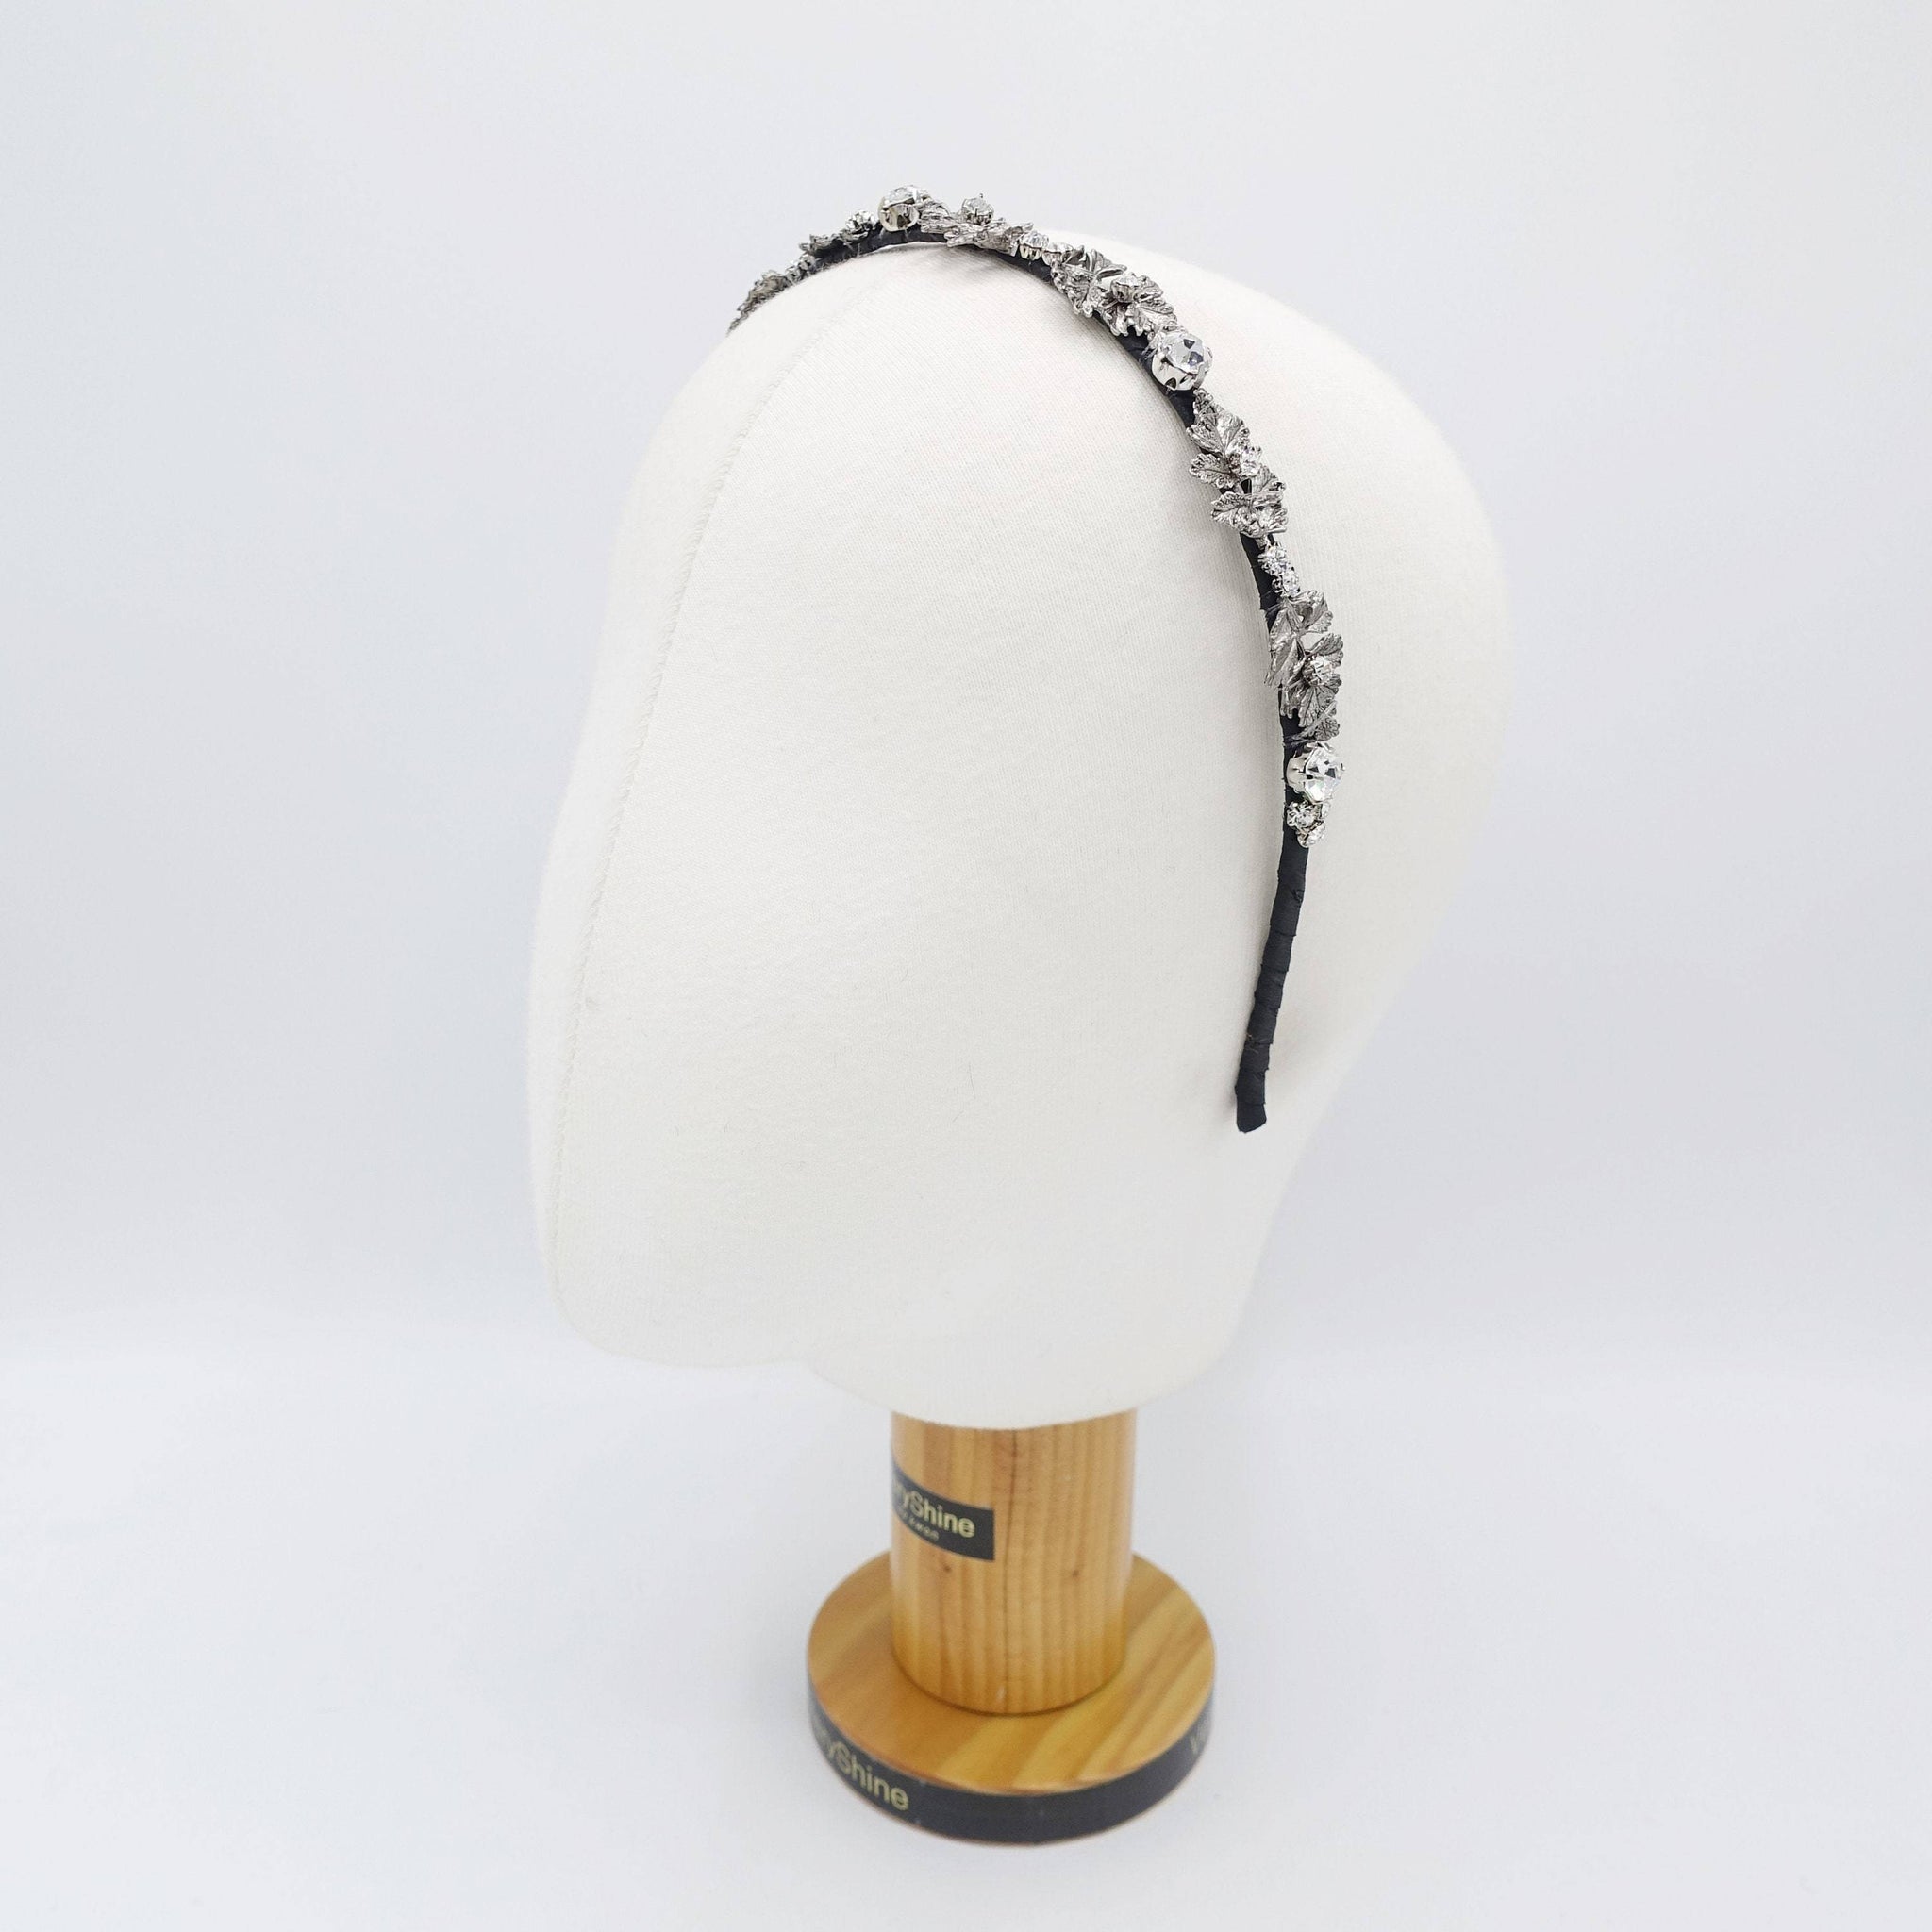 VeryShine metal leaf headband rhinestone embellished thin hairband for women